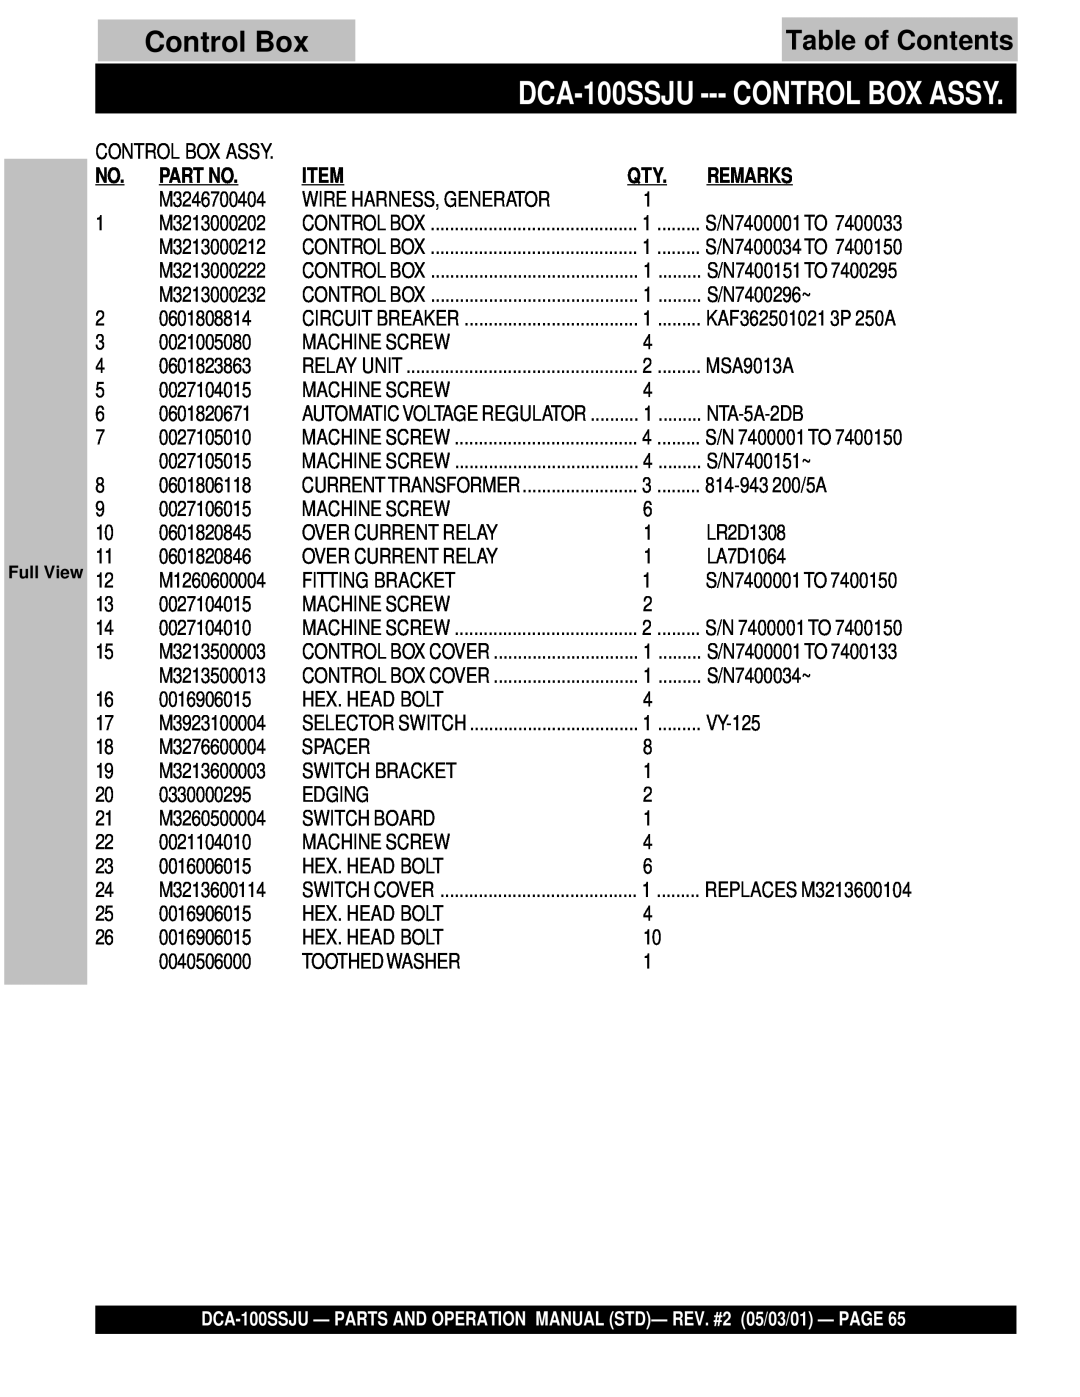 Multiquip DCA-100SSJU operation manual Control Box Assy, Table of Contents 